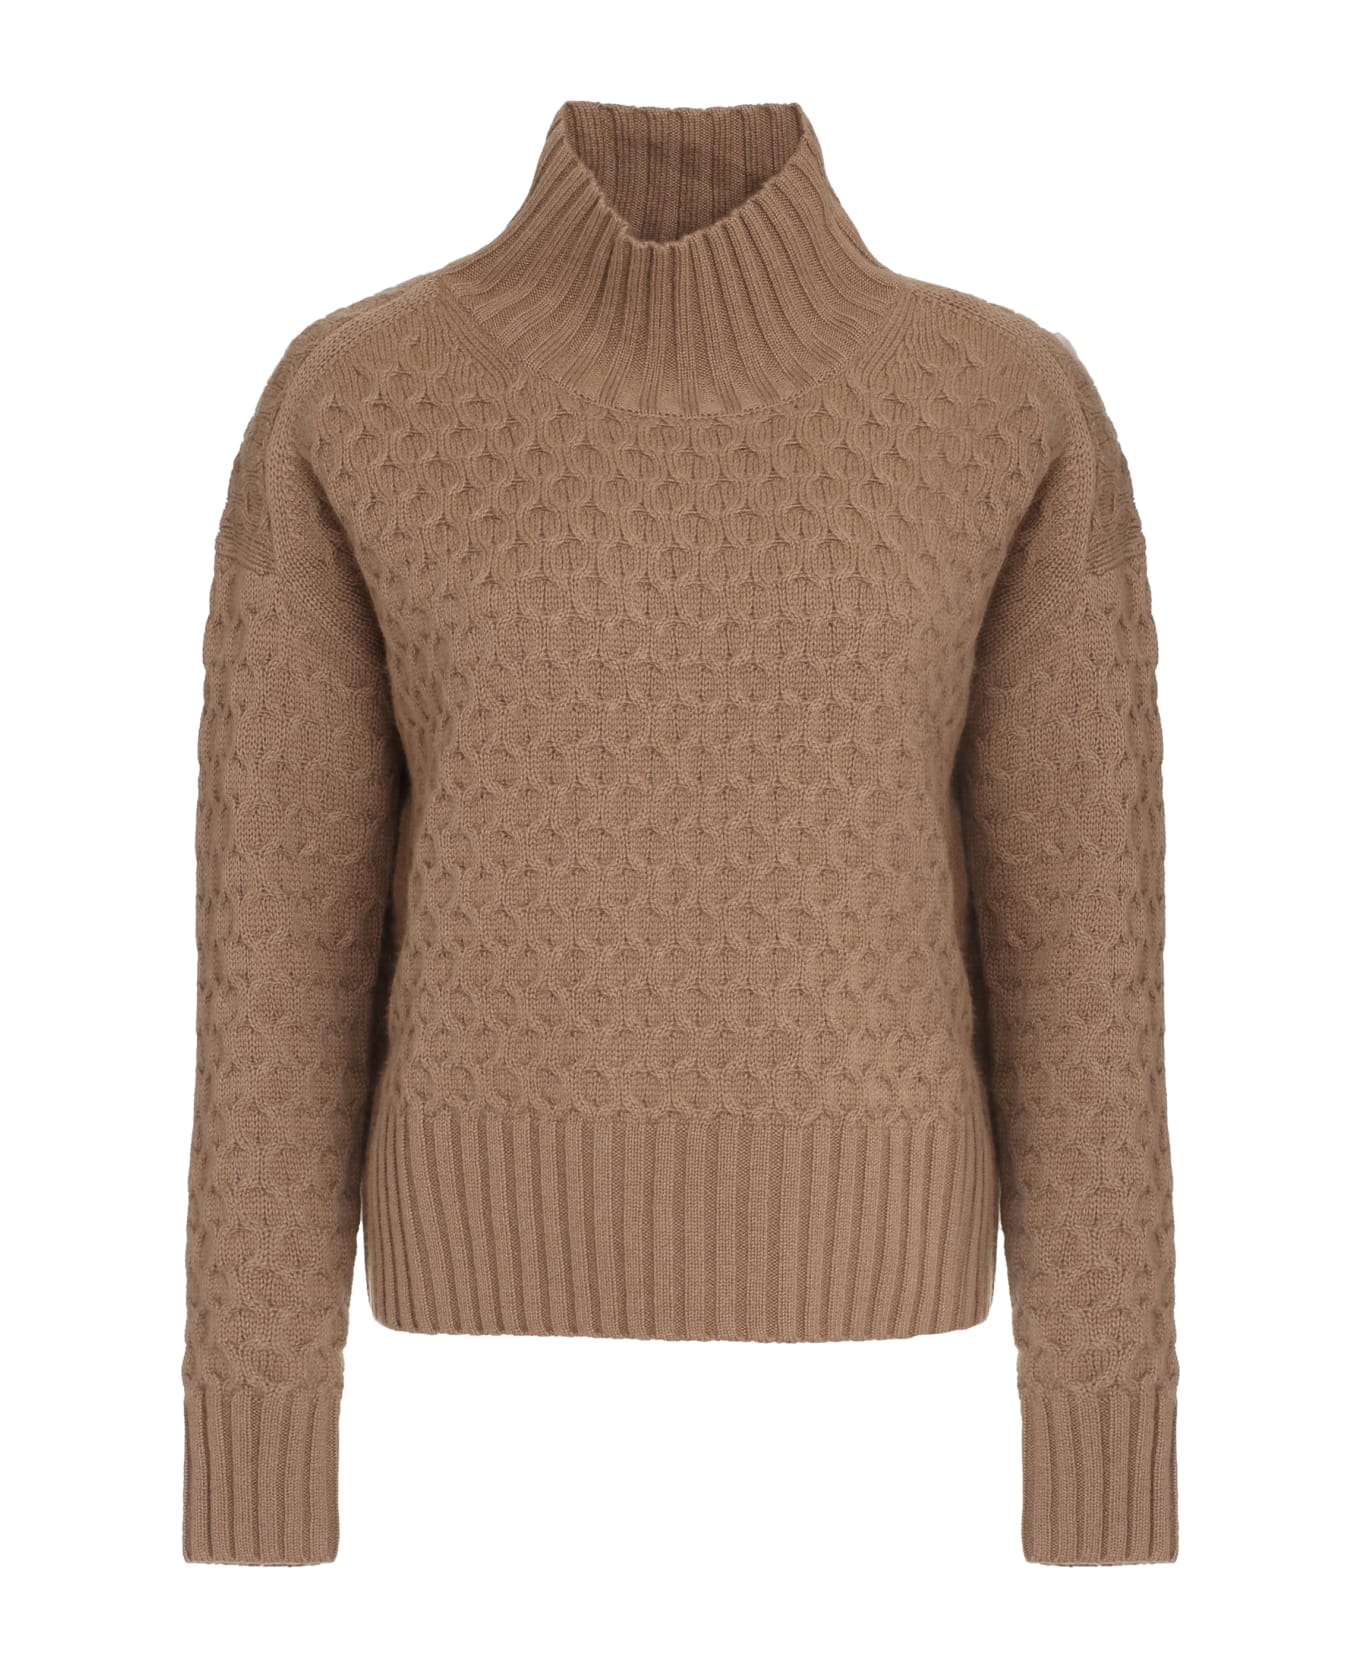 Max Mara Studio Valdese Wool And Cashmere Sweater - Camel